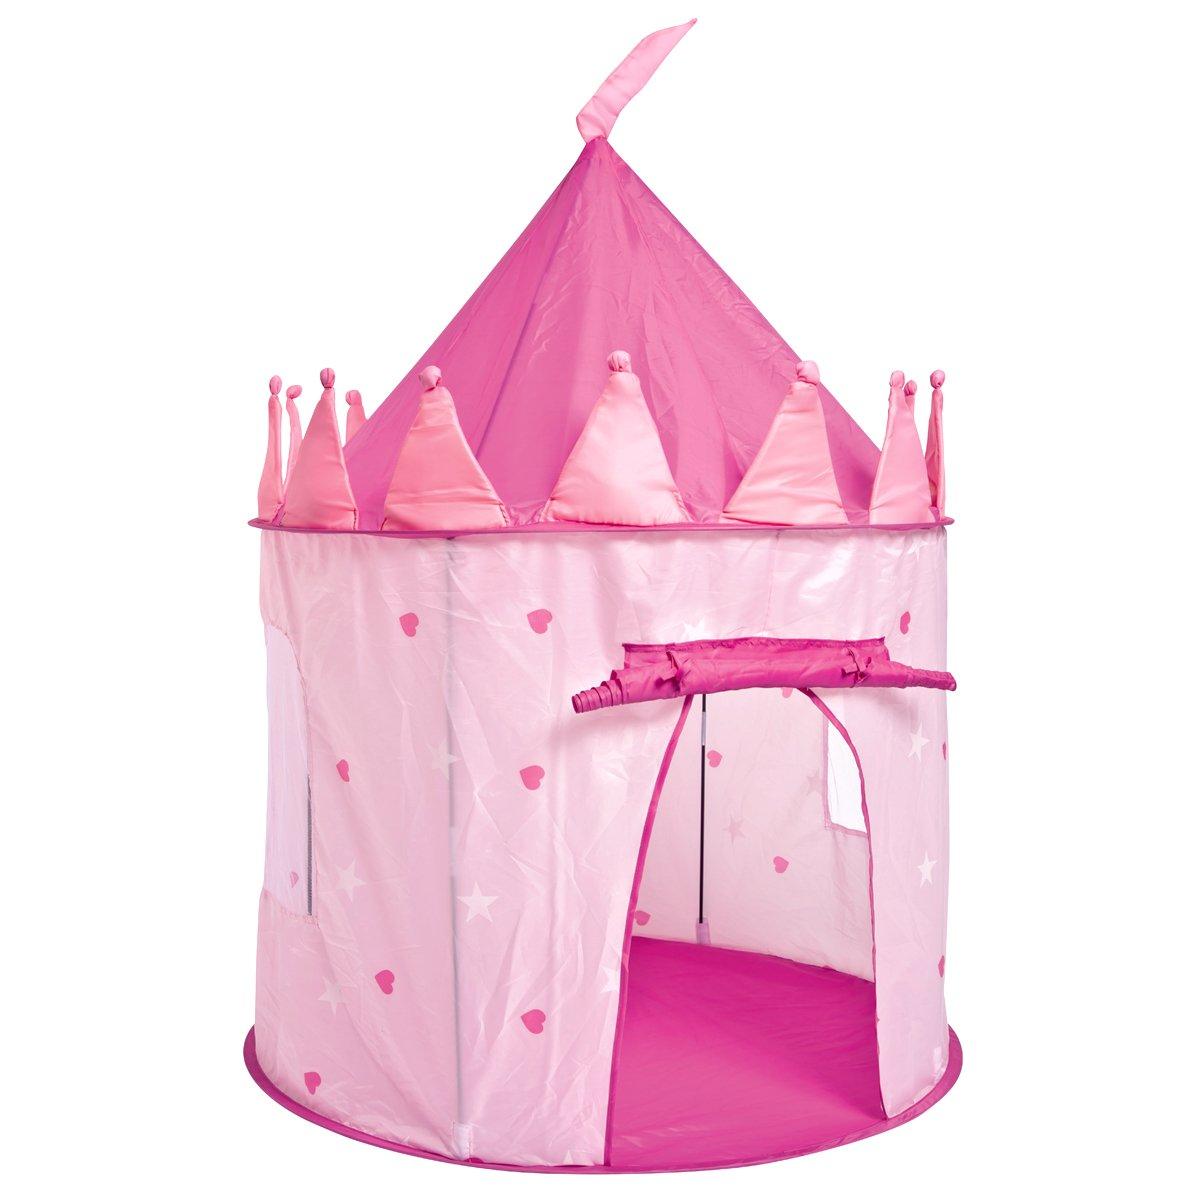 Children’s Round Play Tent Princess/Knight